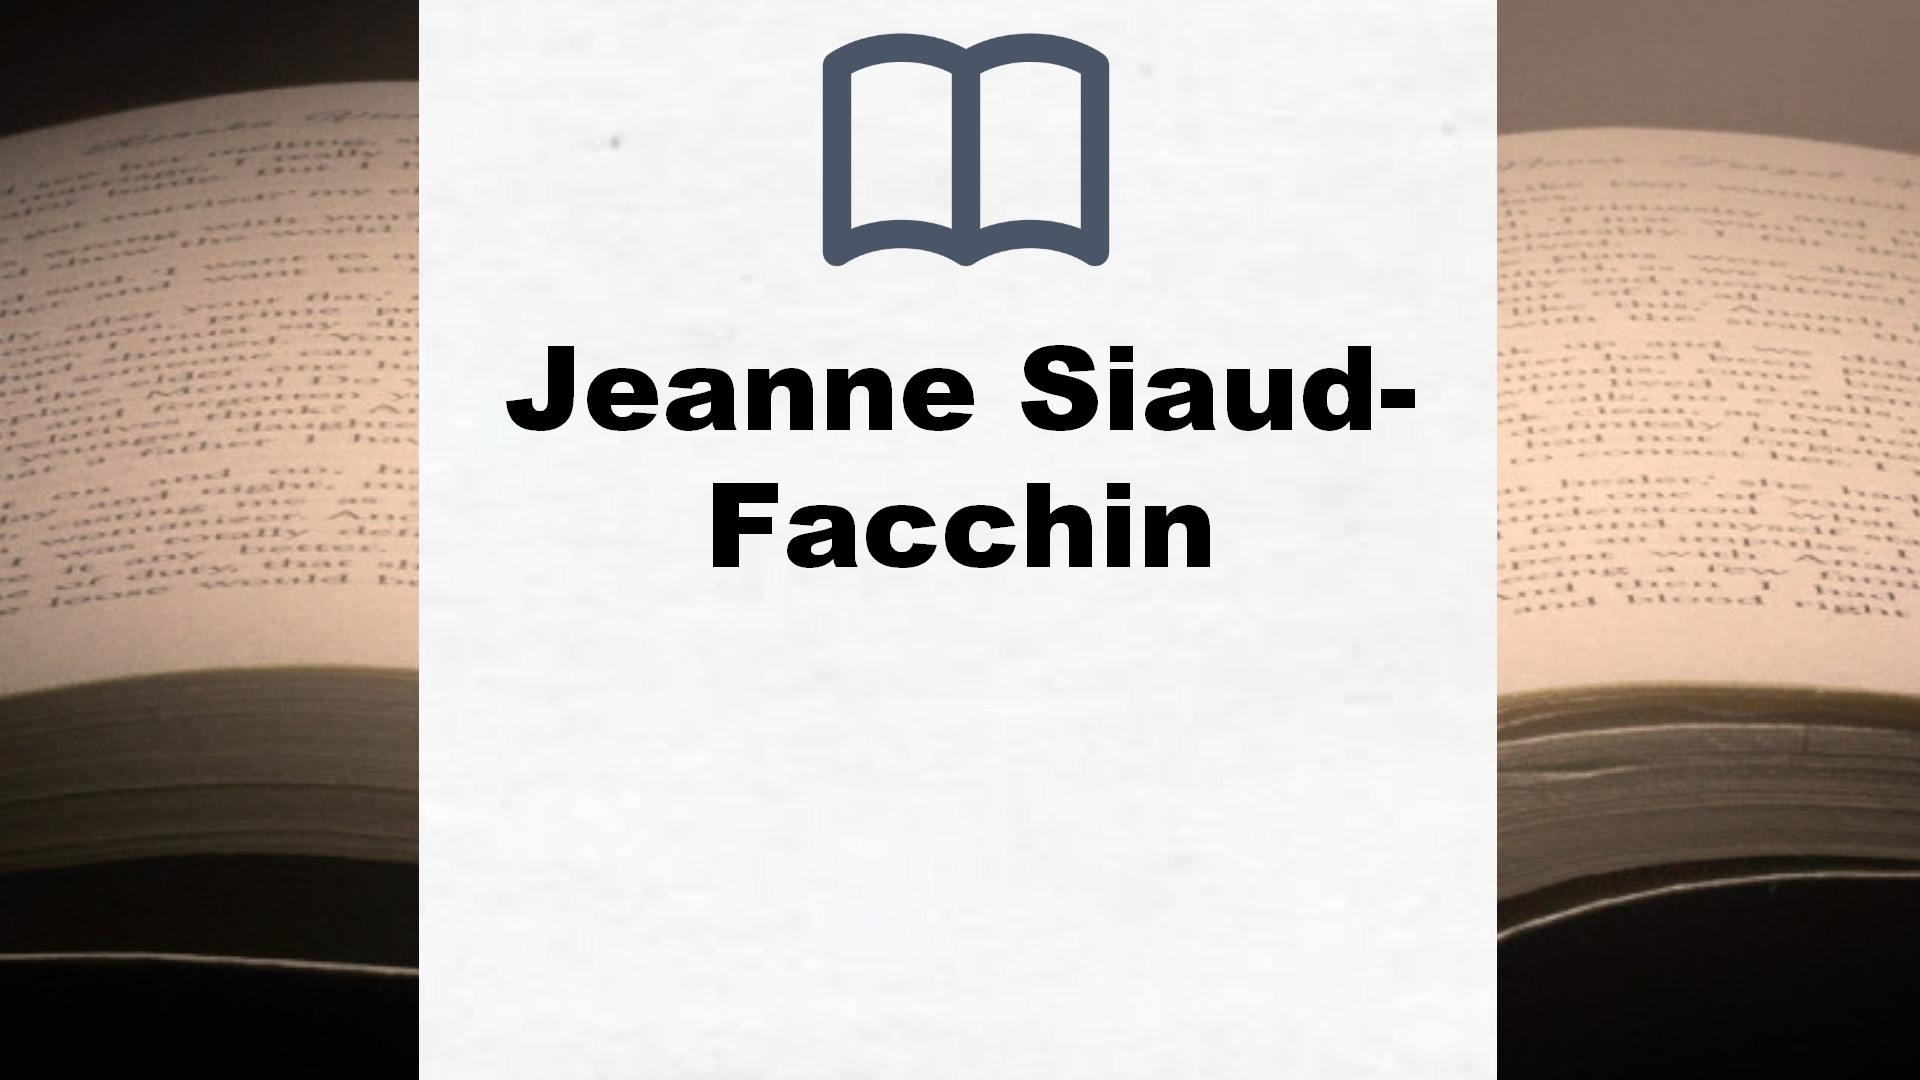 Libros Jeanne Siaud-Facchin